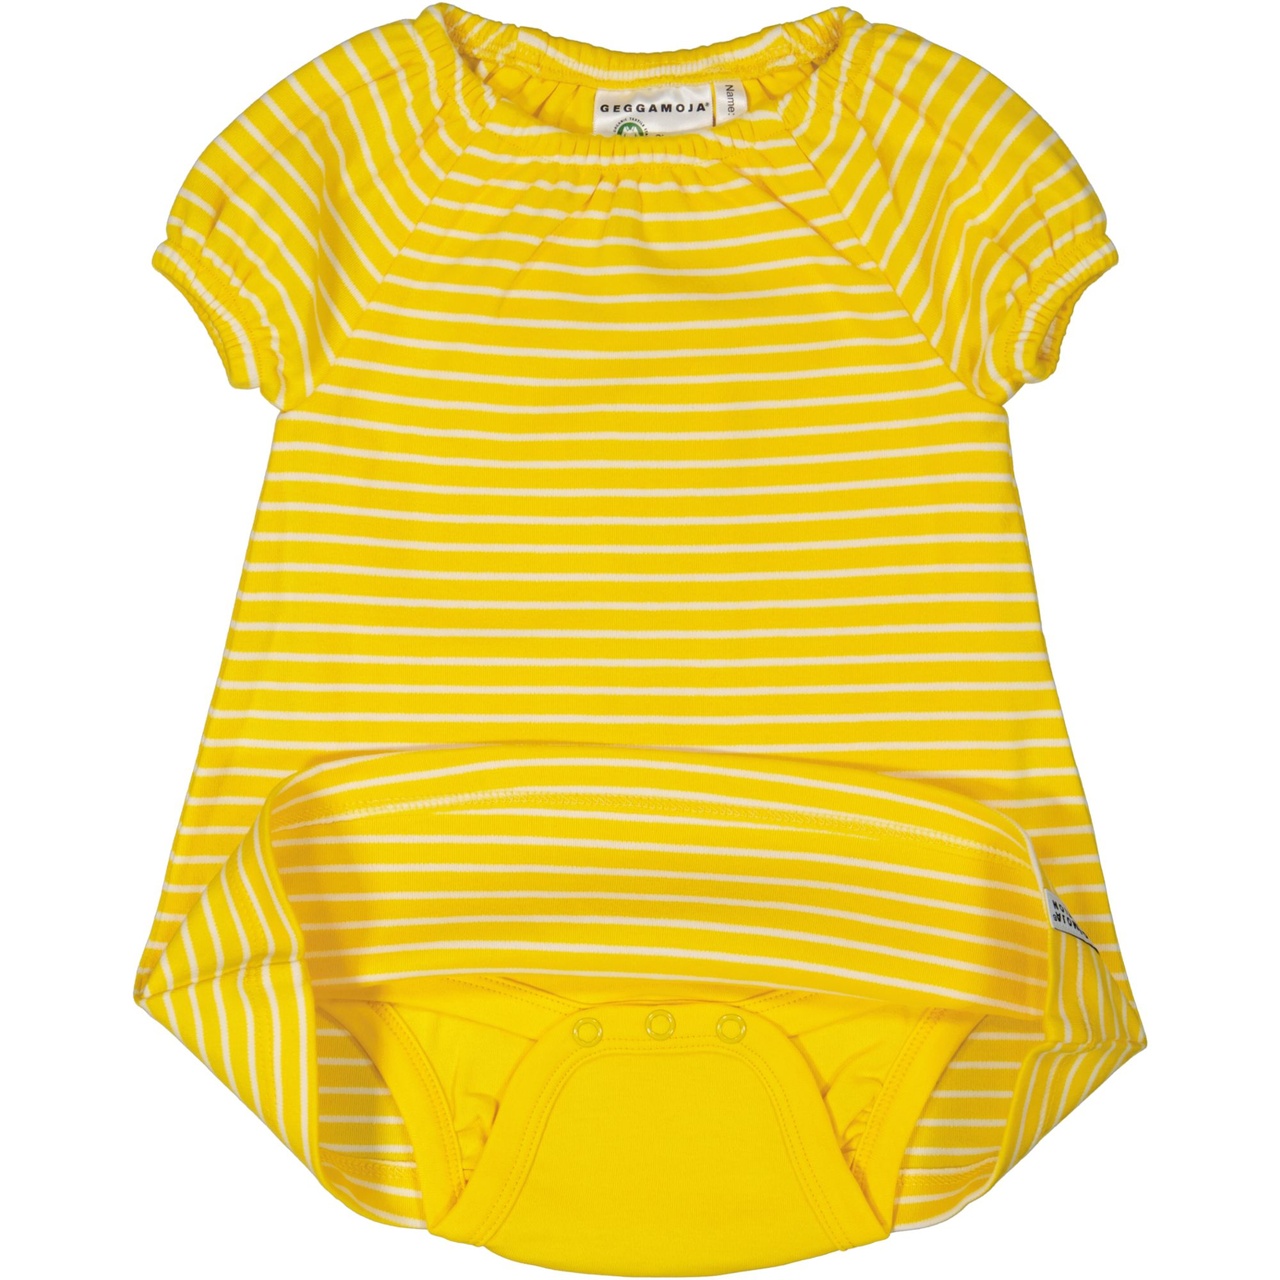 Singoalla dress Yellow/white  74/80